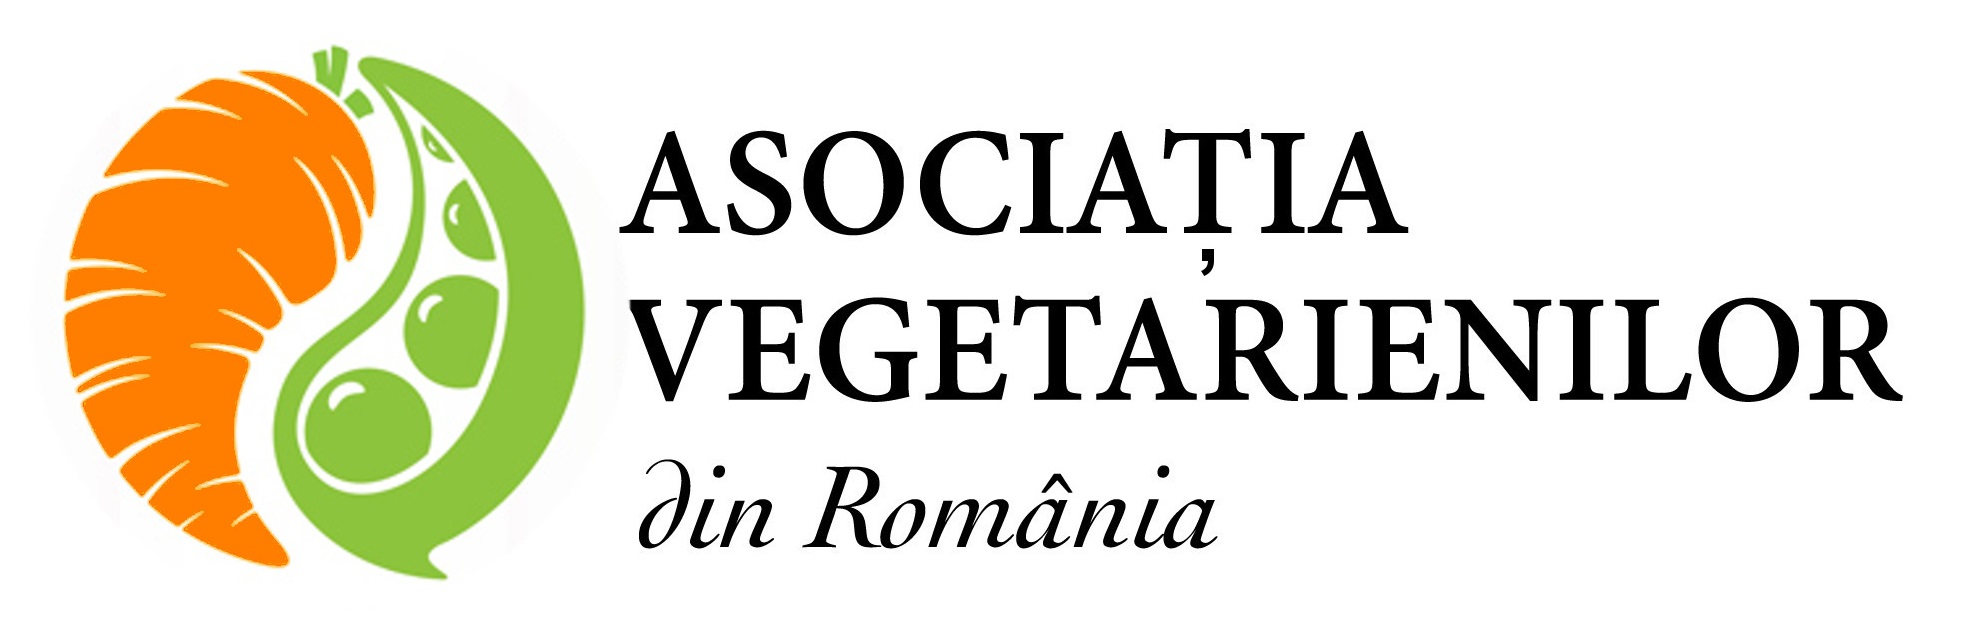 Asociatia vegetarienilor